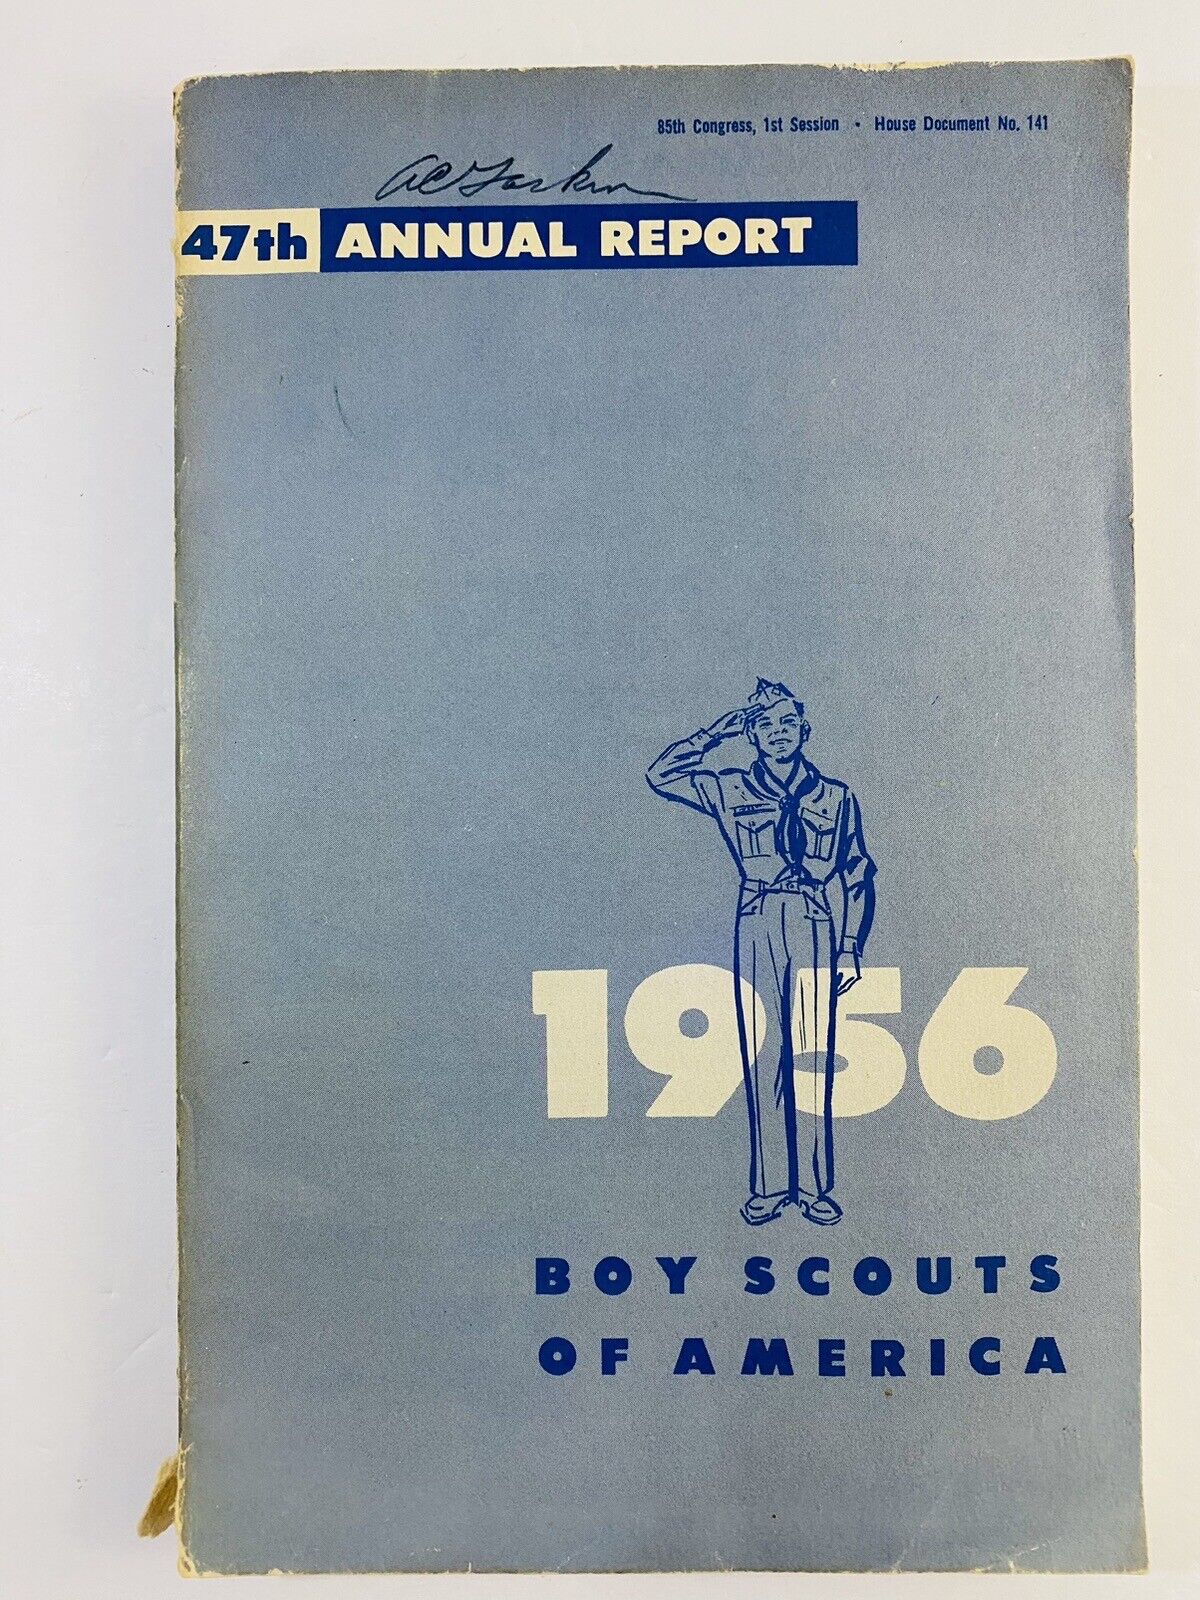 Annual Report 47th 1956 Boy Scouts of America 